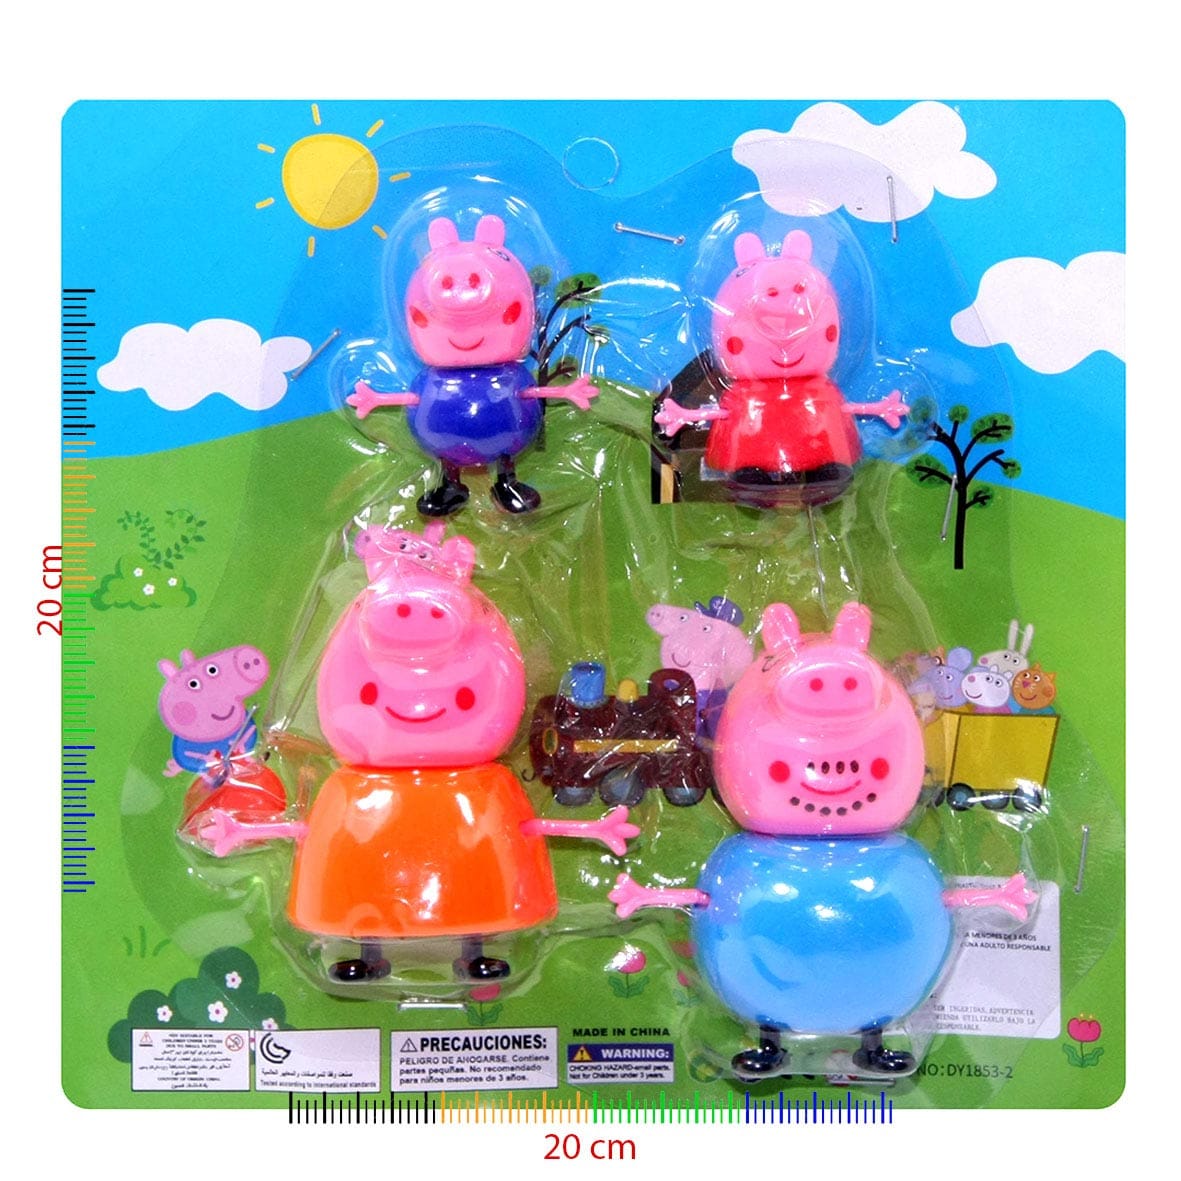 Personajes de la serie animada Peppa Pig